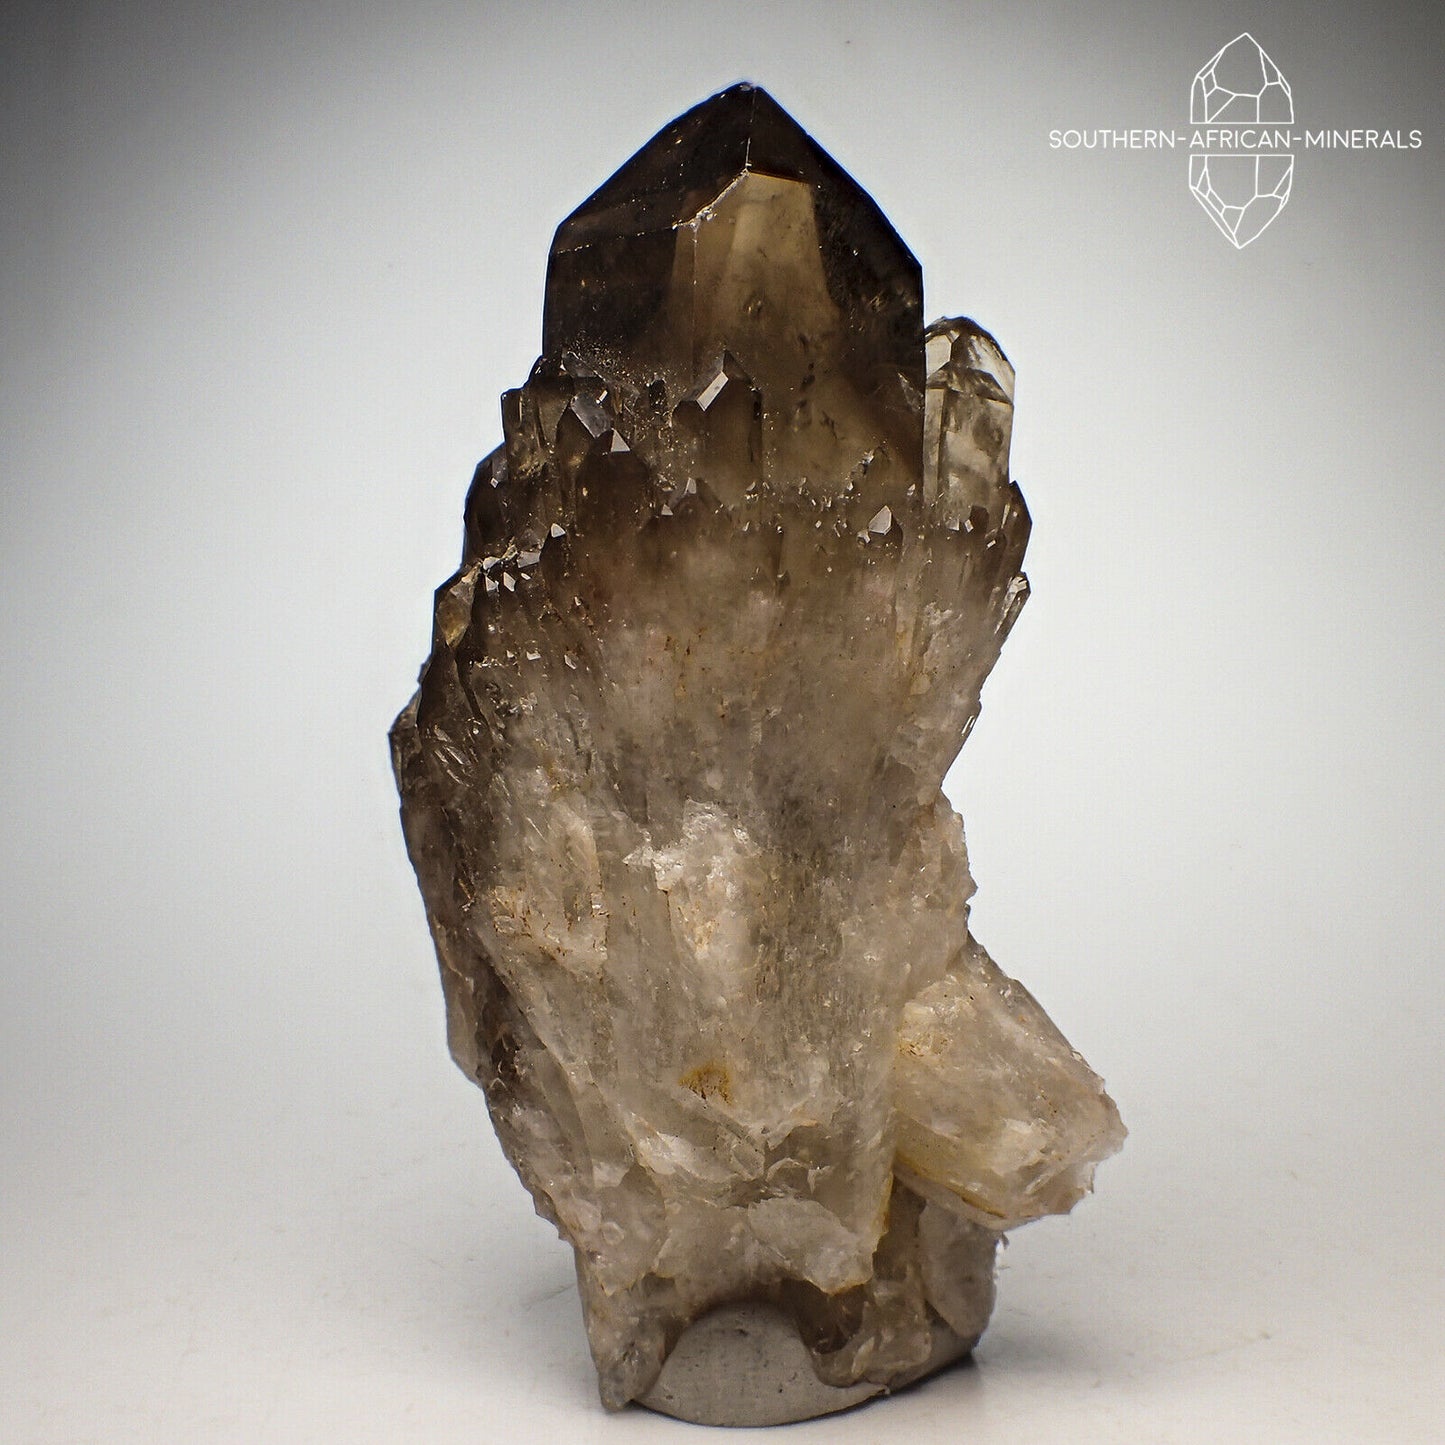 Smoky Citrine Quartz Crystal Specimen (Kundalini Quartz), Luena, Katanga Province, DRC